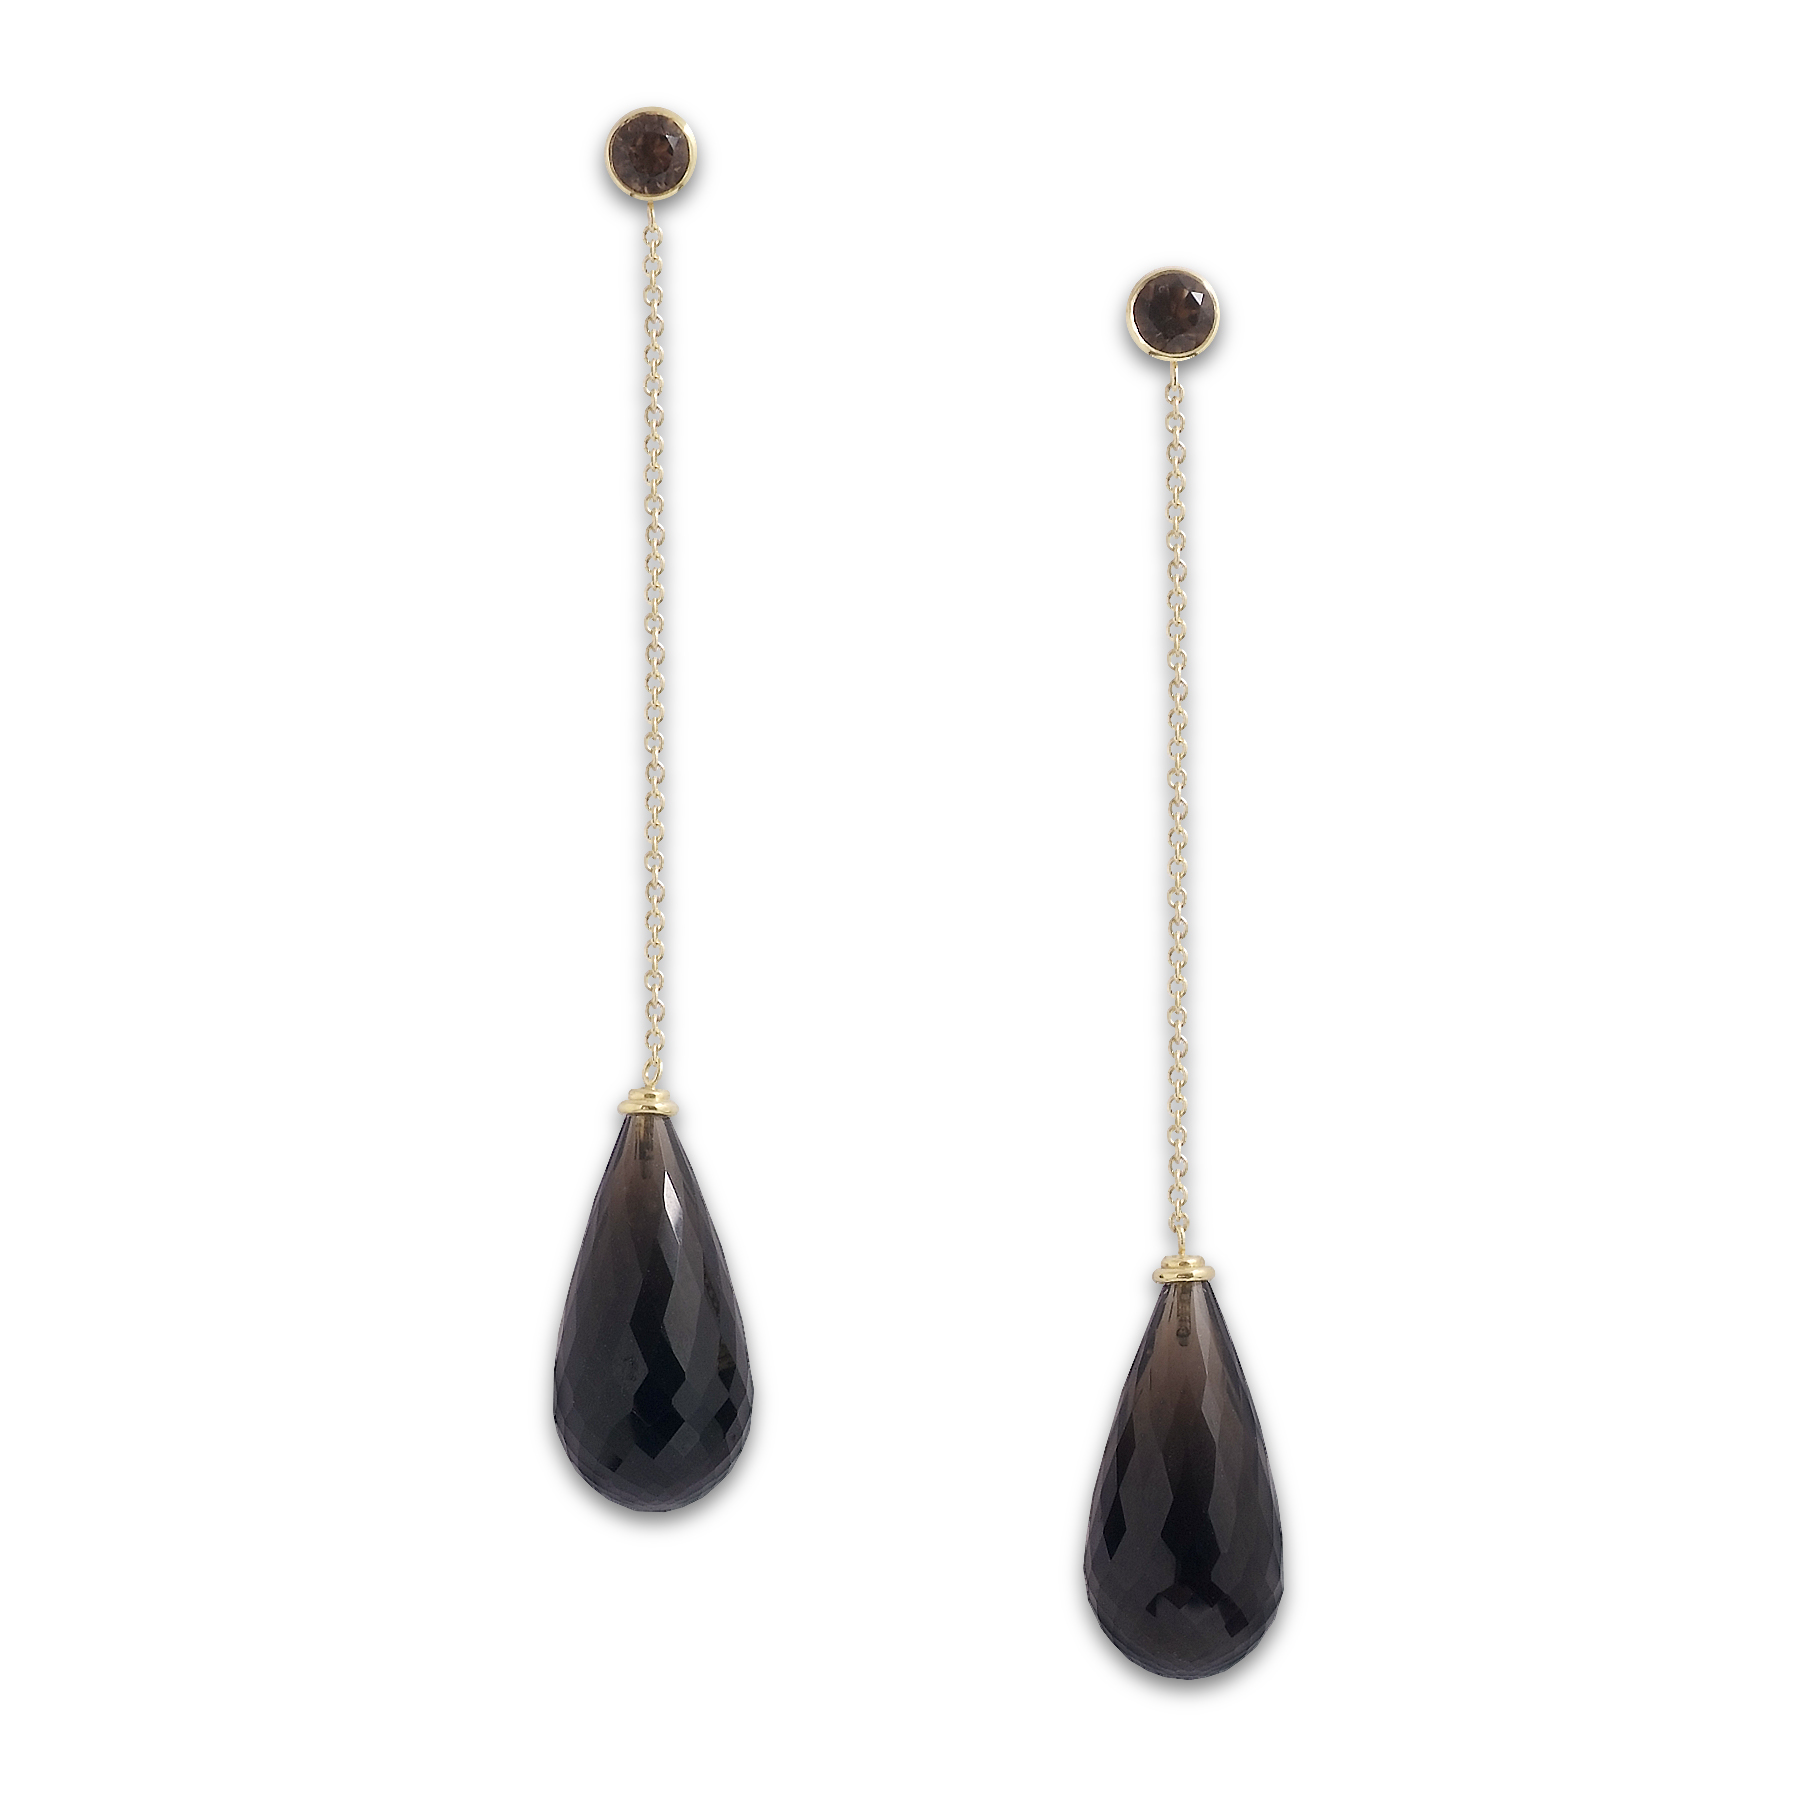 Smoky quartz drop earrings